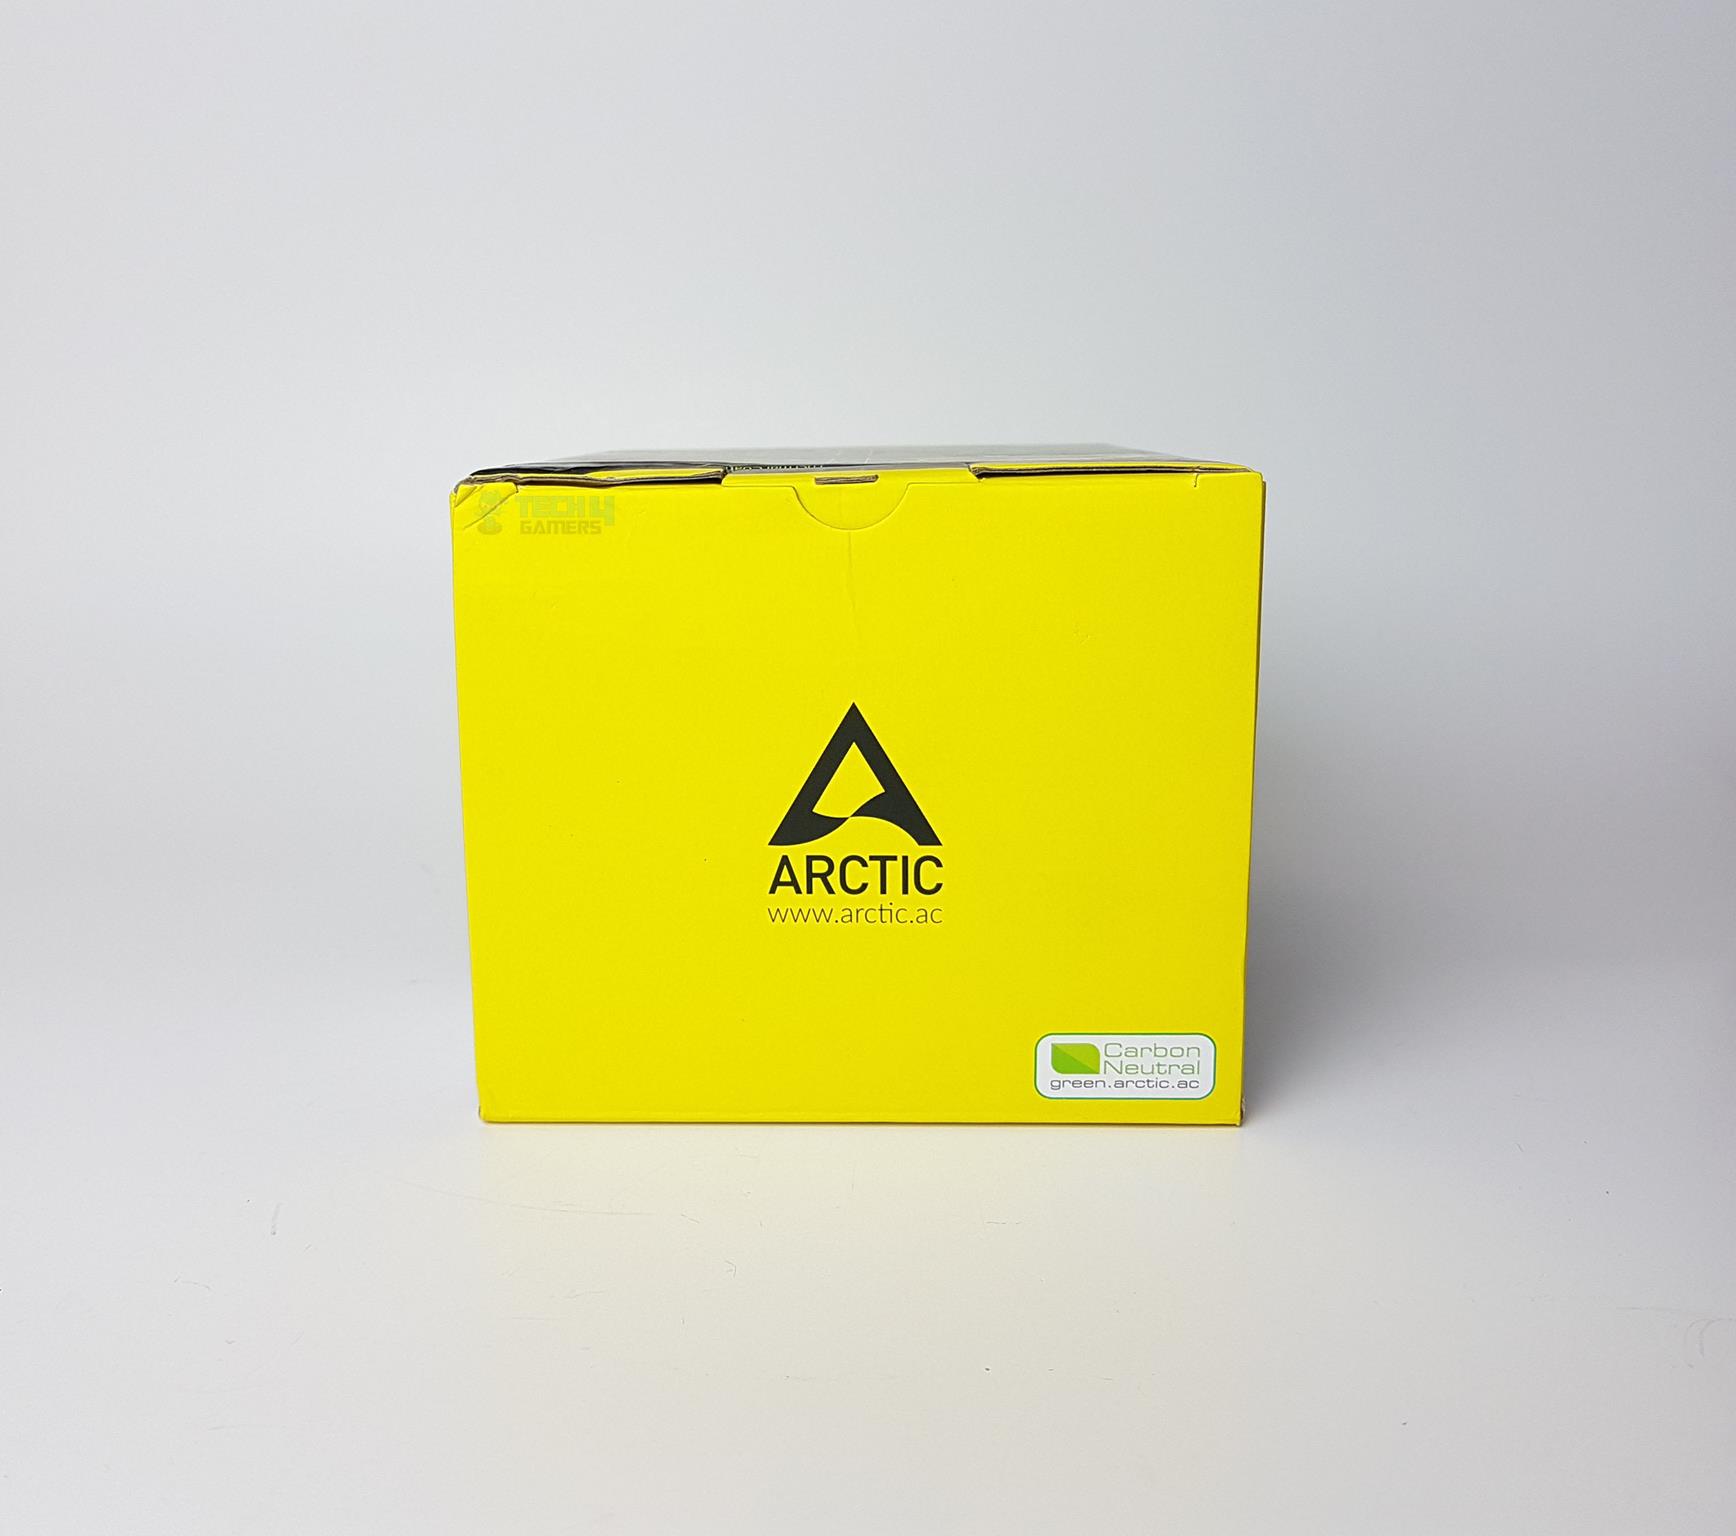 Freezer 34 eSports Packing yellow box